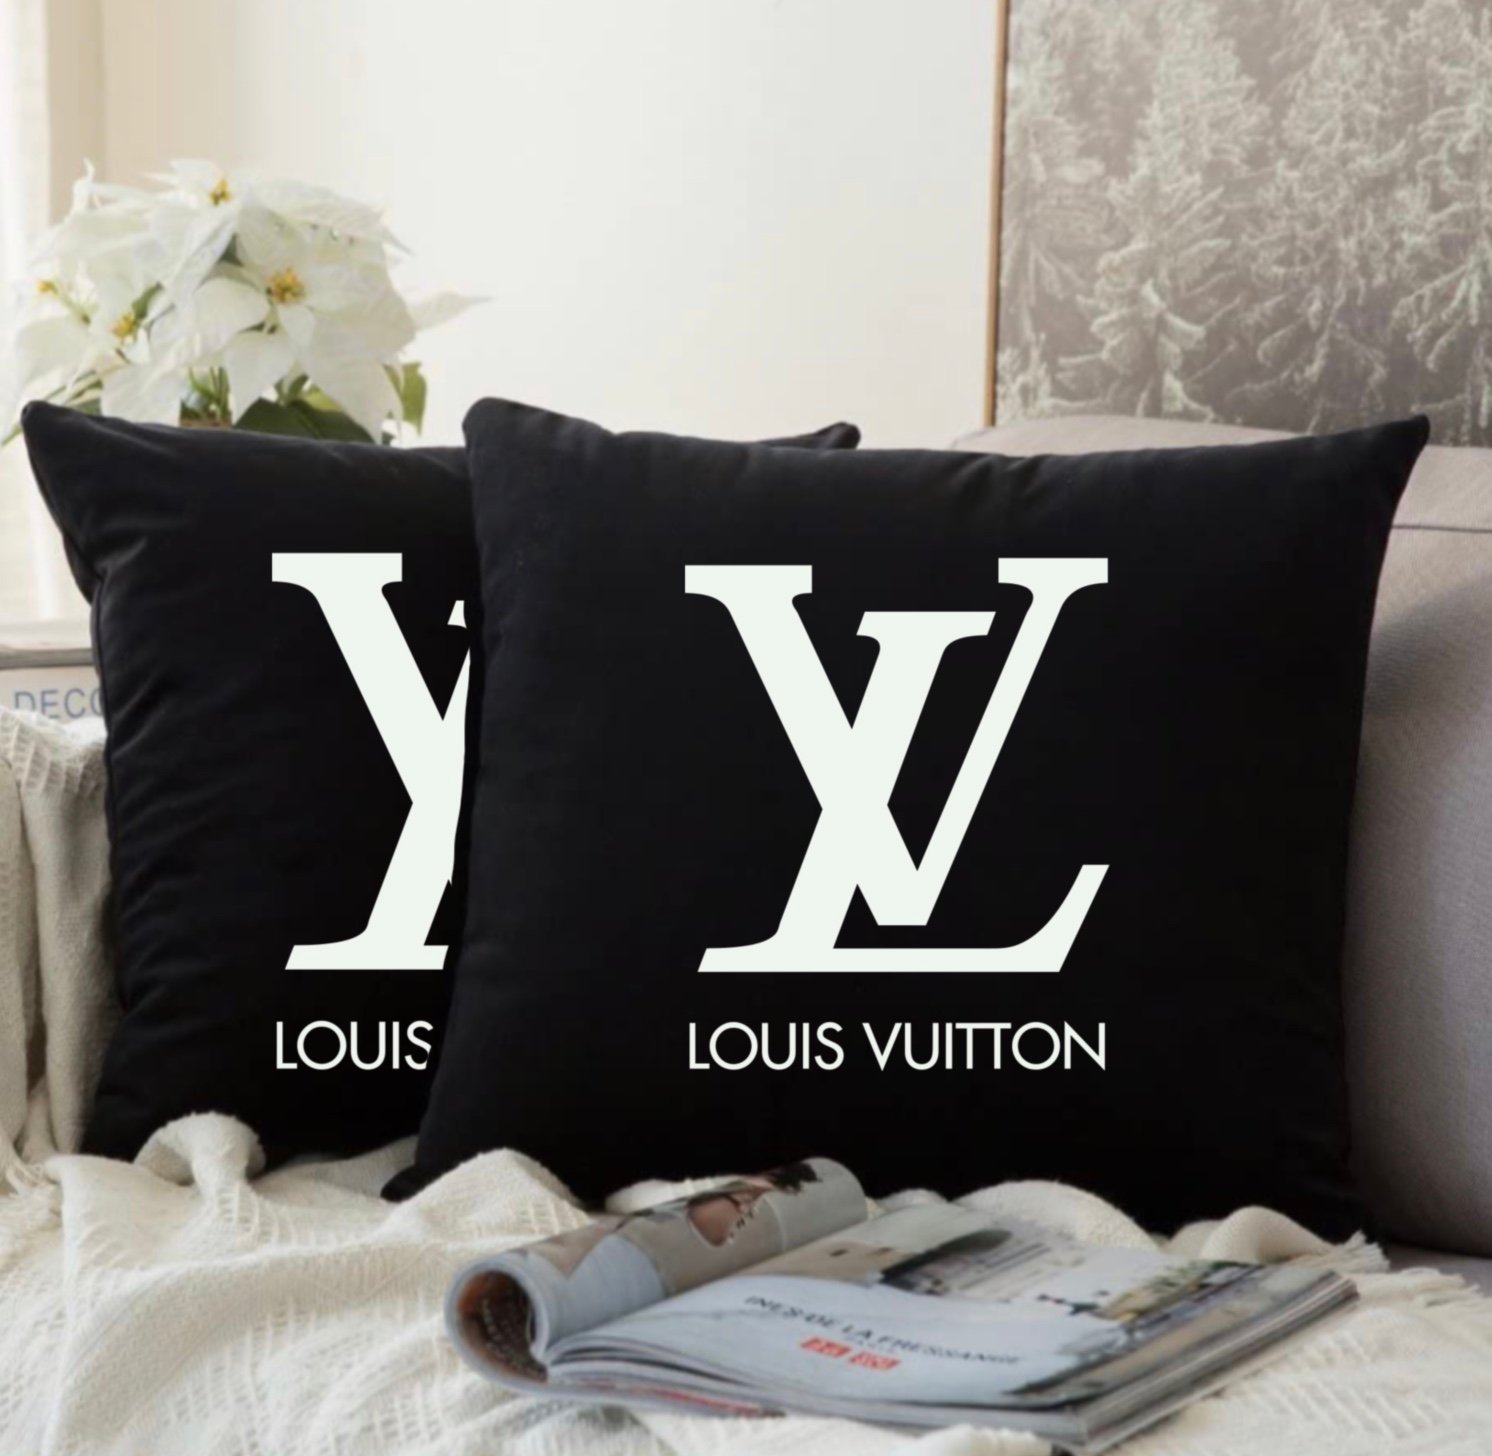 Louis Vuitton Pillow Case Discount, SAVE 39% 